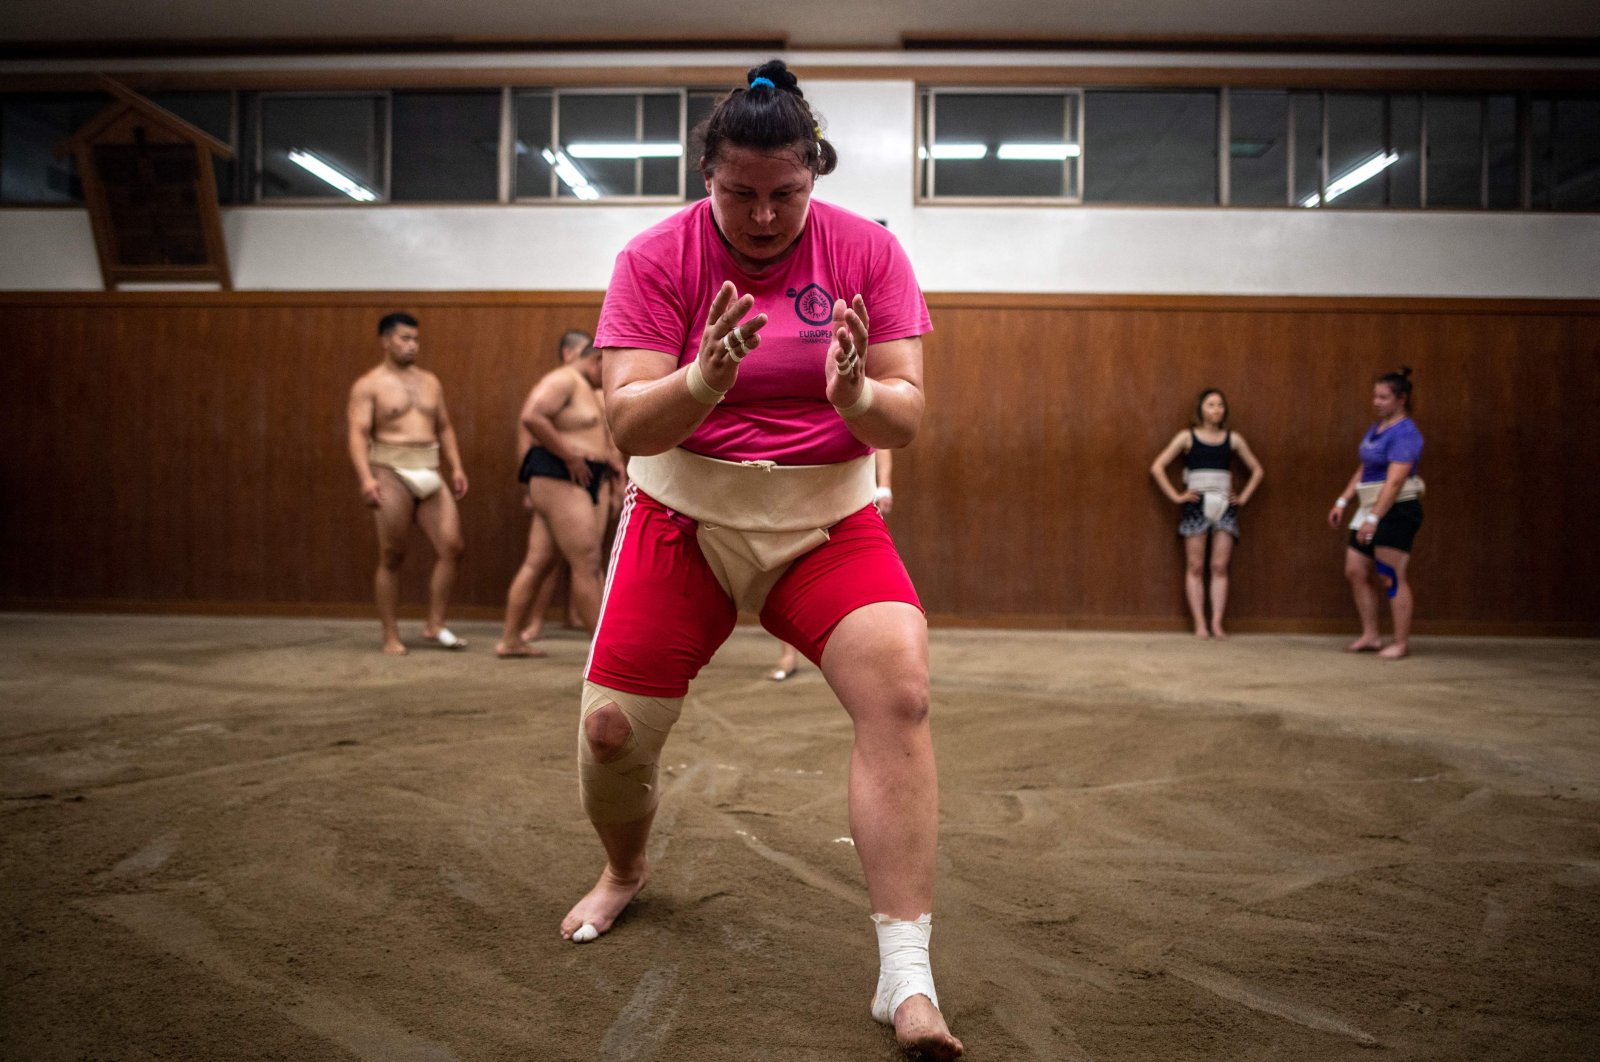 Ukrainian sumo wrestler Ivanna Berezovska attends a training session, in Soka, Japan, July 3, 2022. (AFP PHOTO)